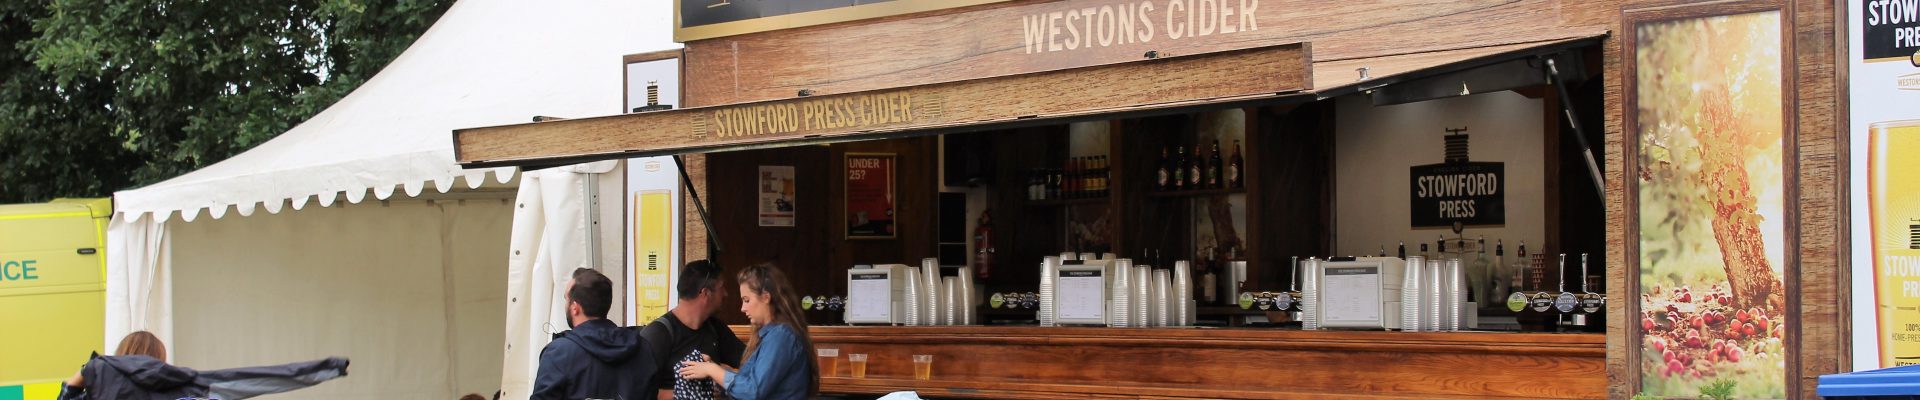 Stowford Press Cider Bar